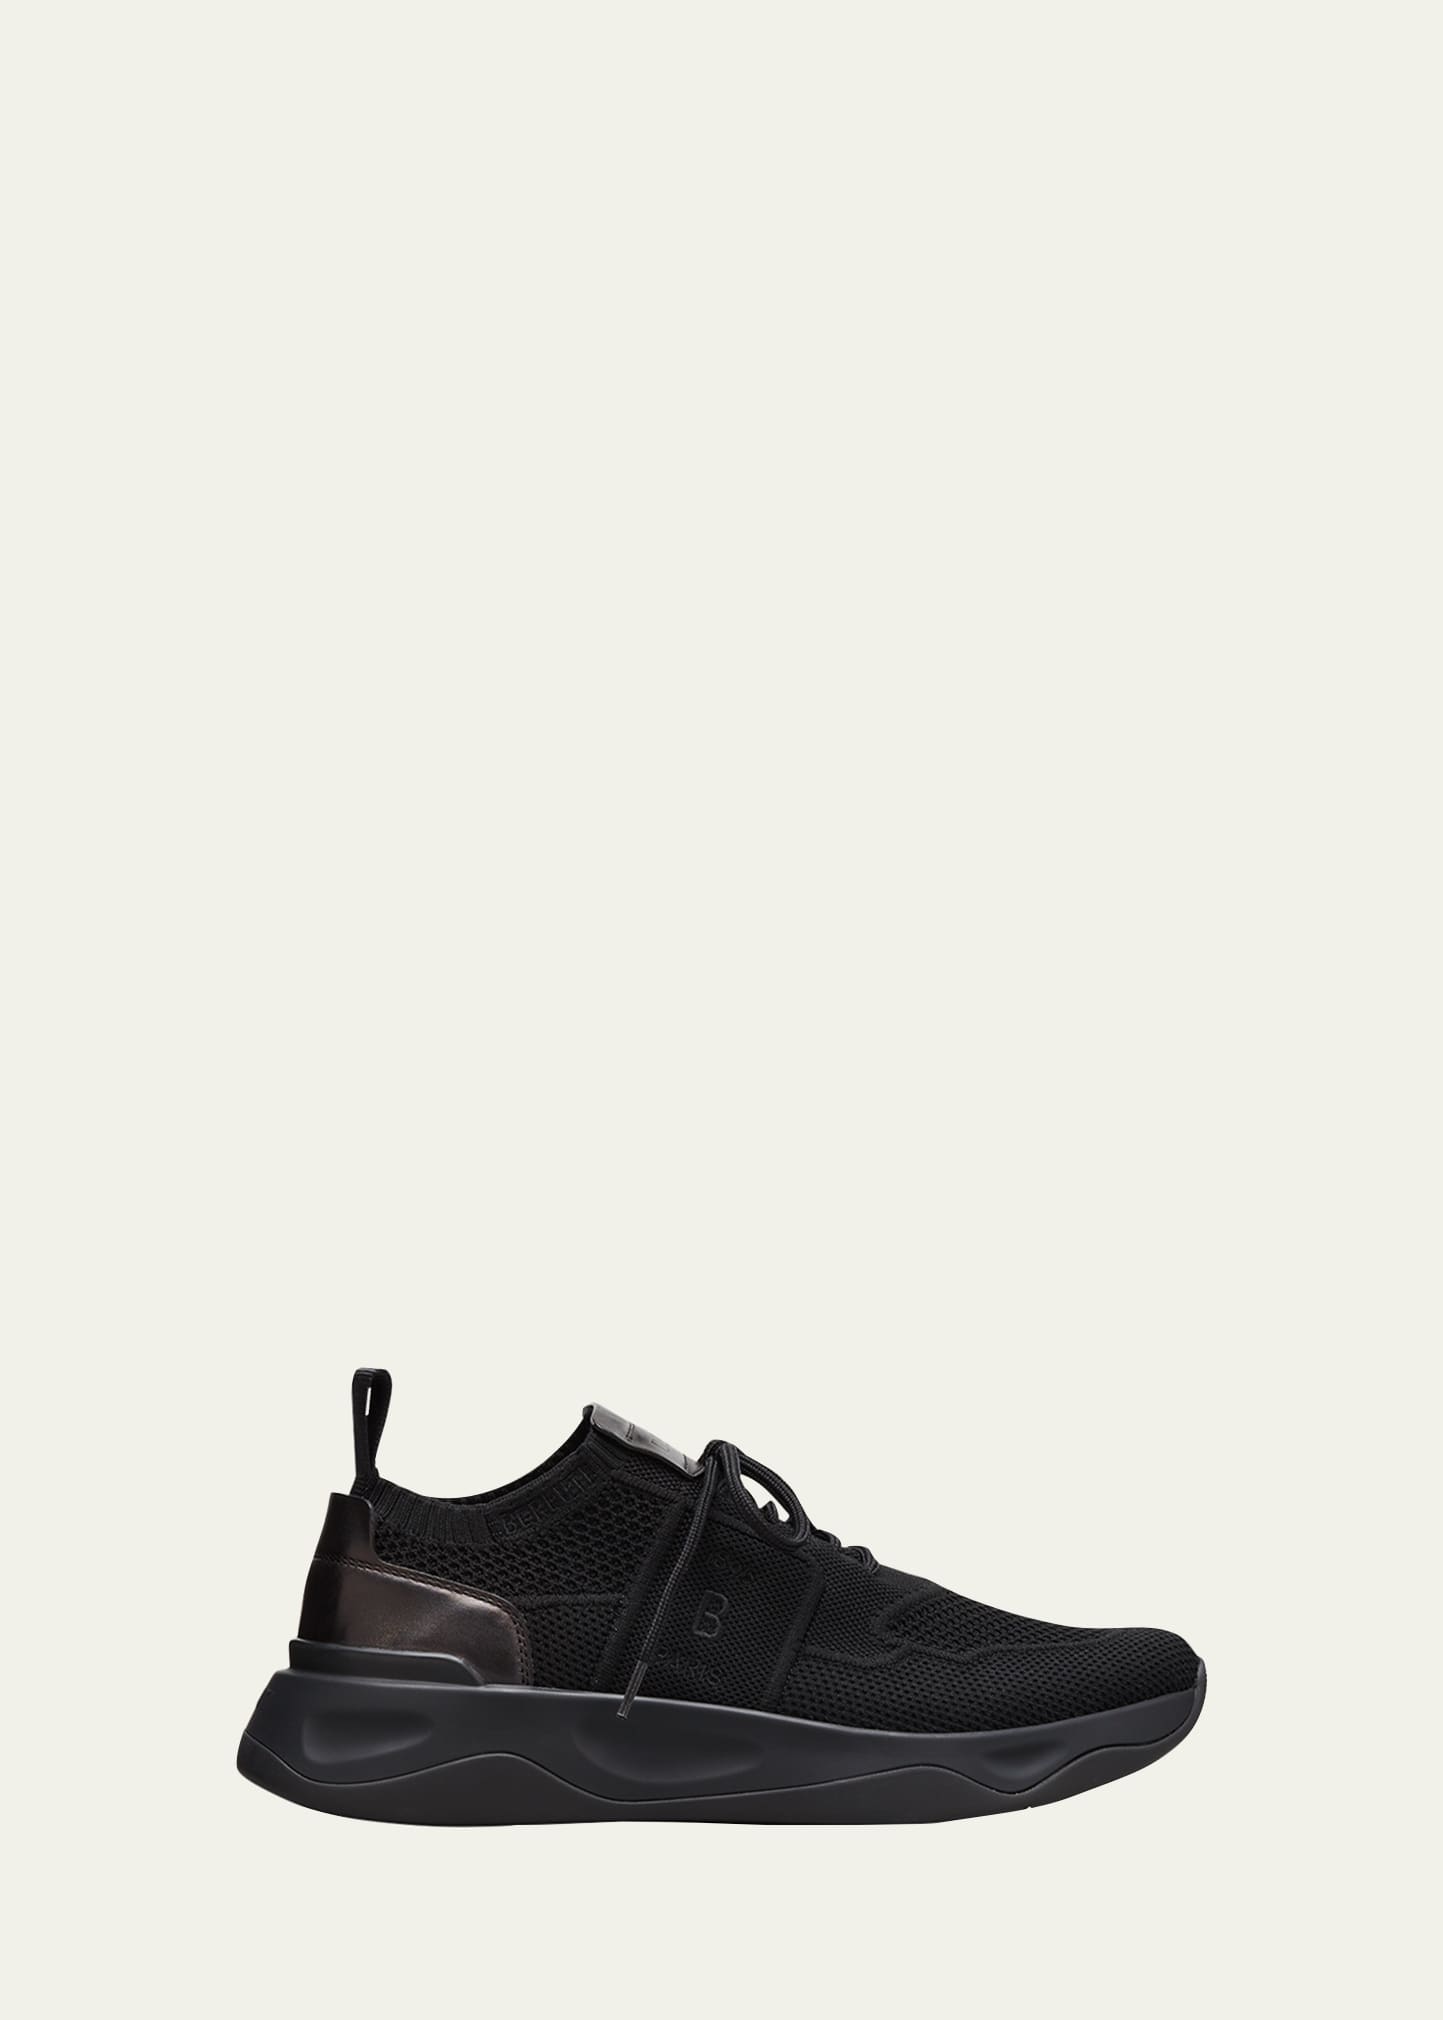 Men's Tonal Knit Runner Sneakers, Black